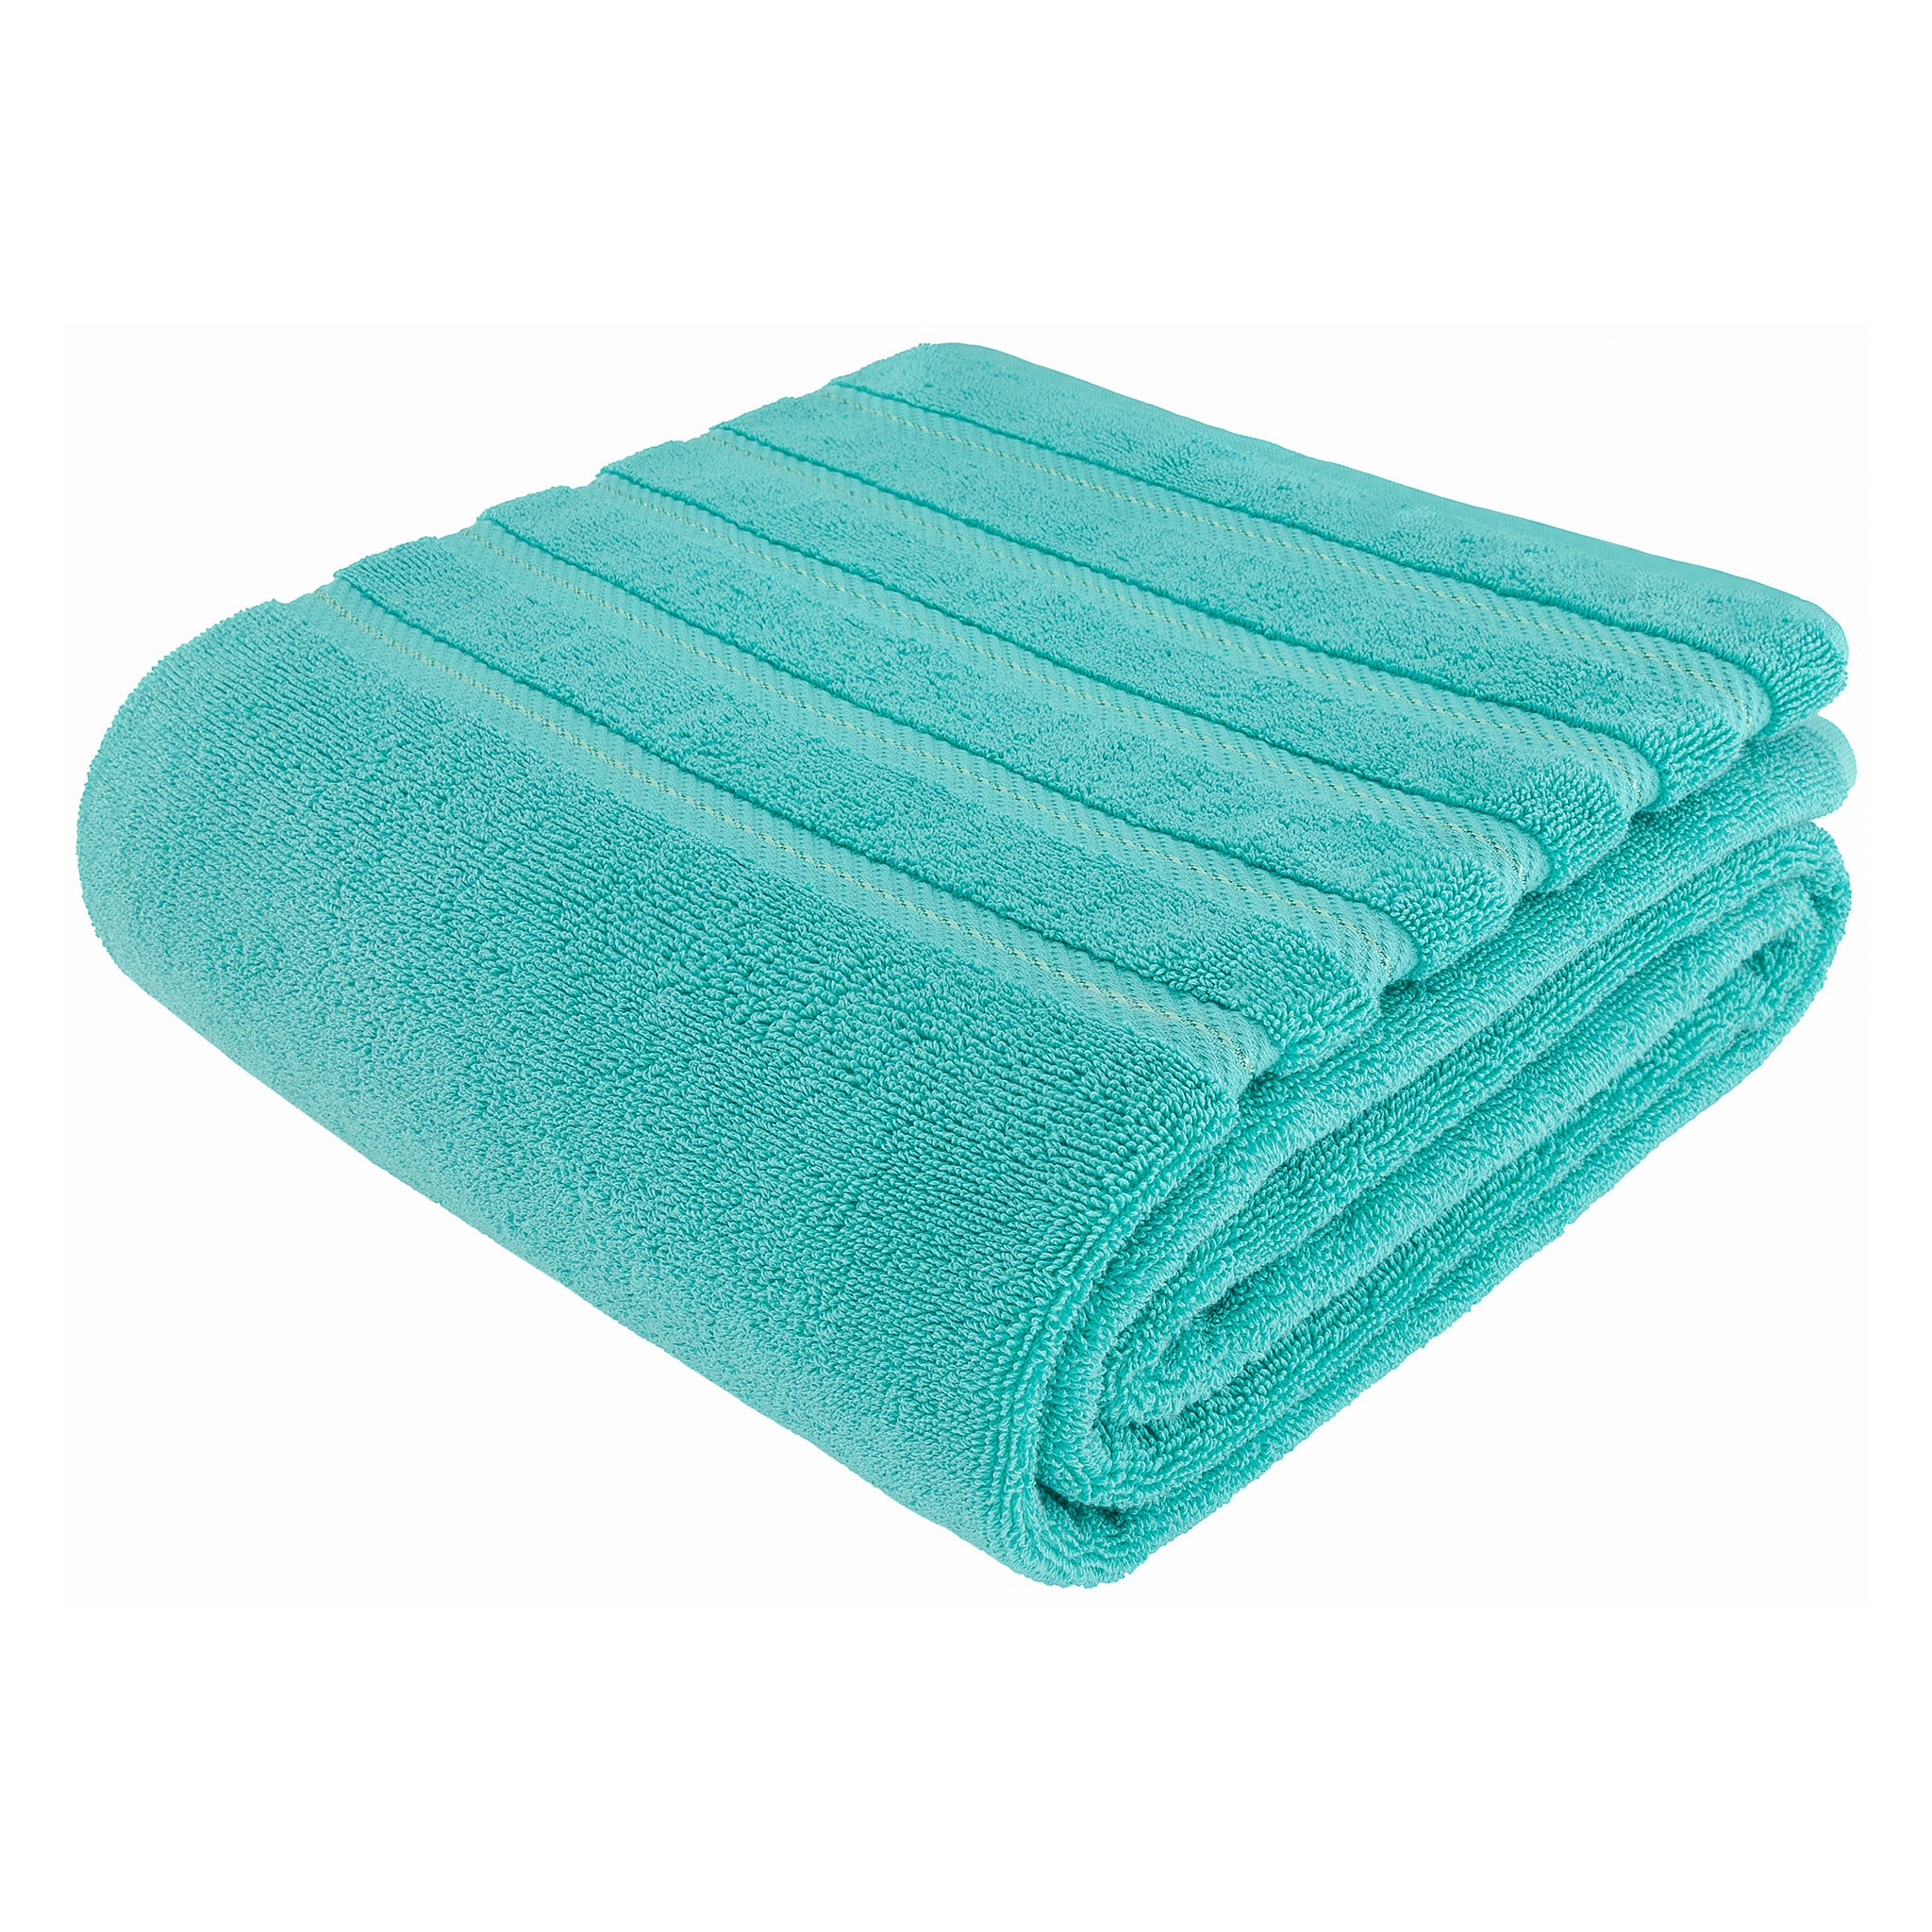 American Soft Linen 35x70 Inch 100% Turkish Cotton Jumbo Bath Sheet turquoise-blue-7